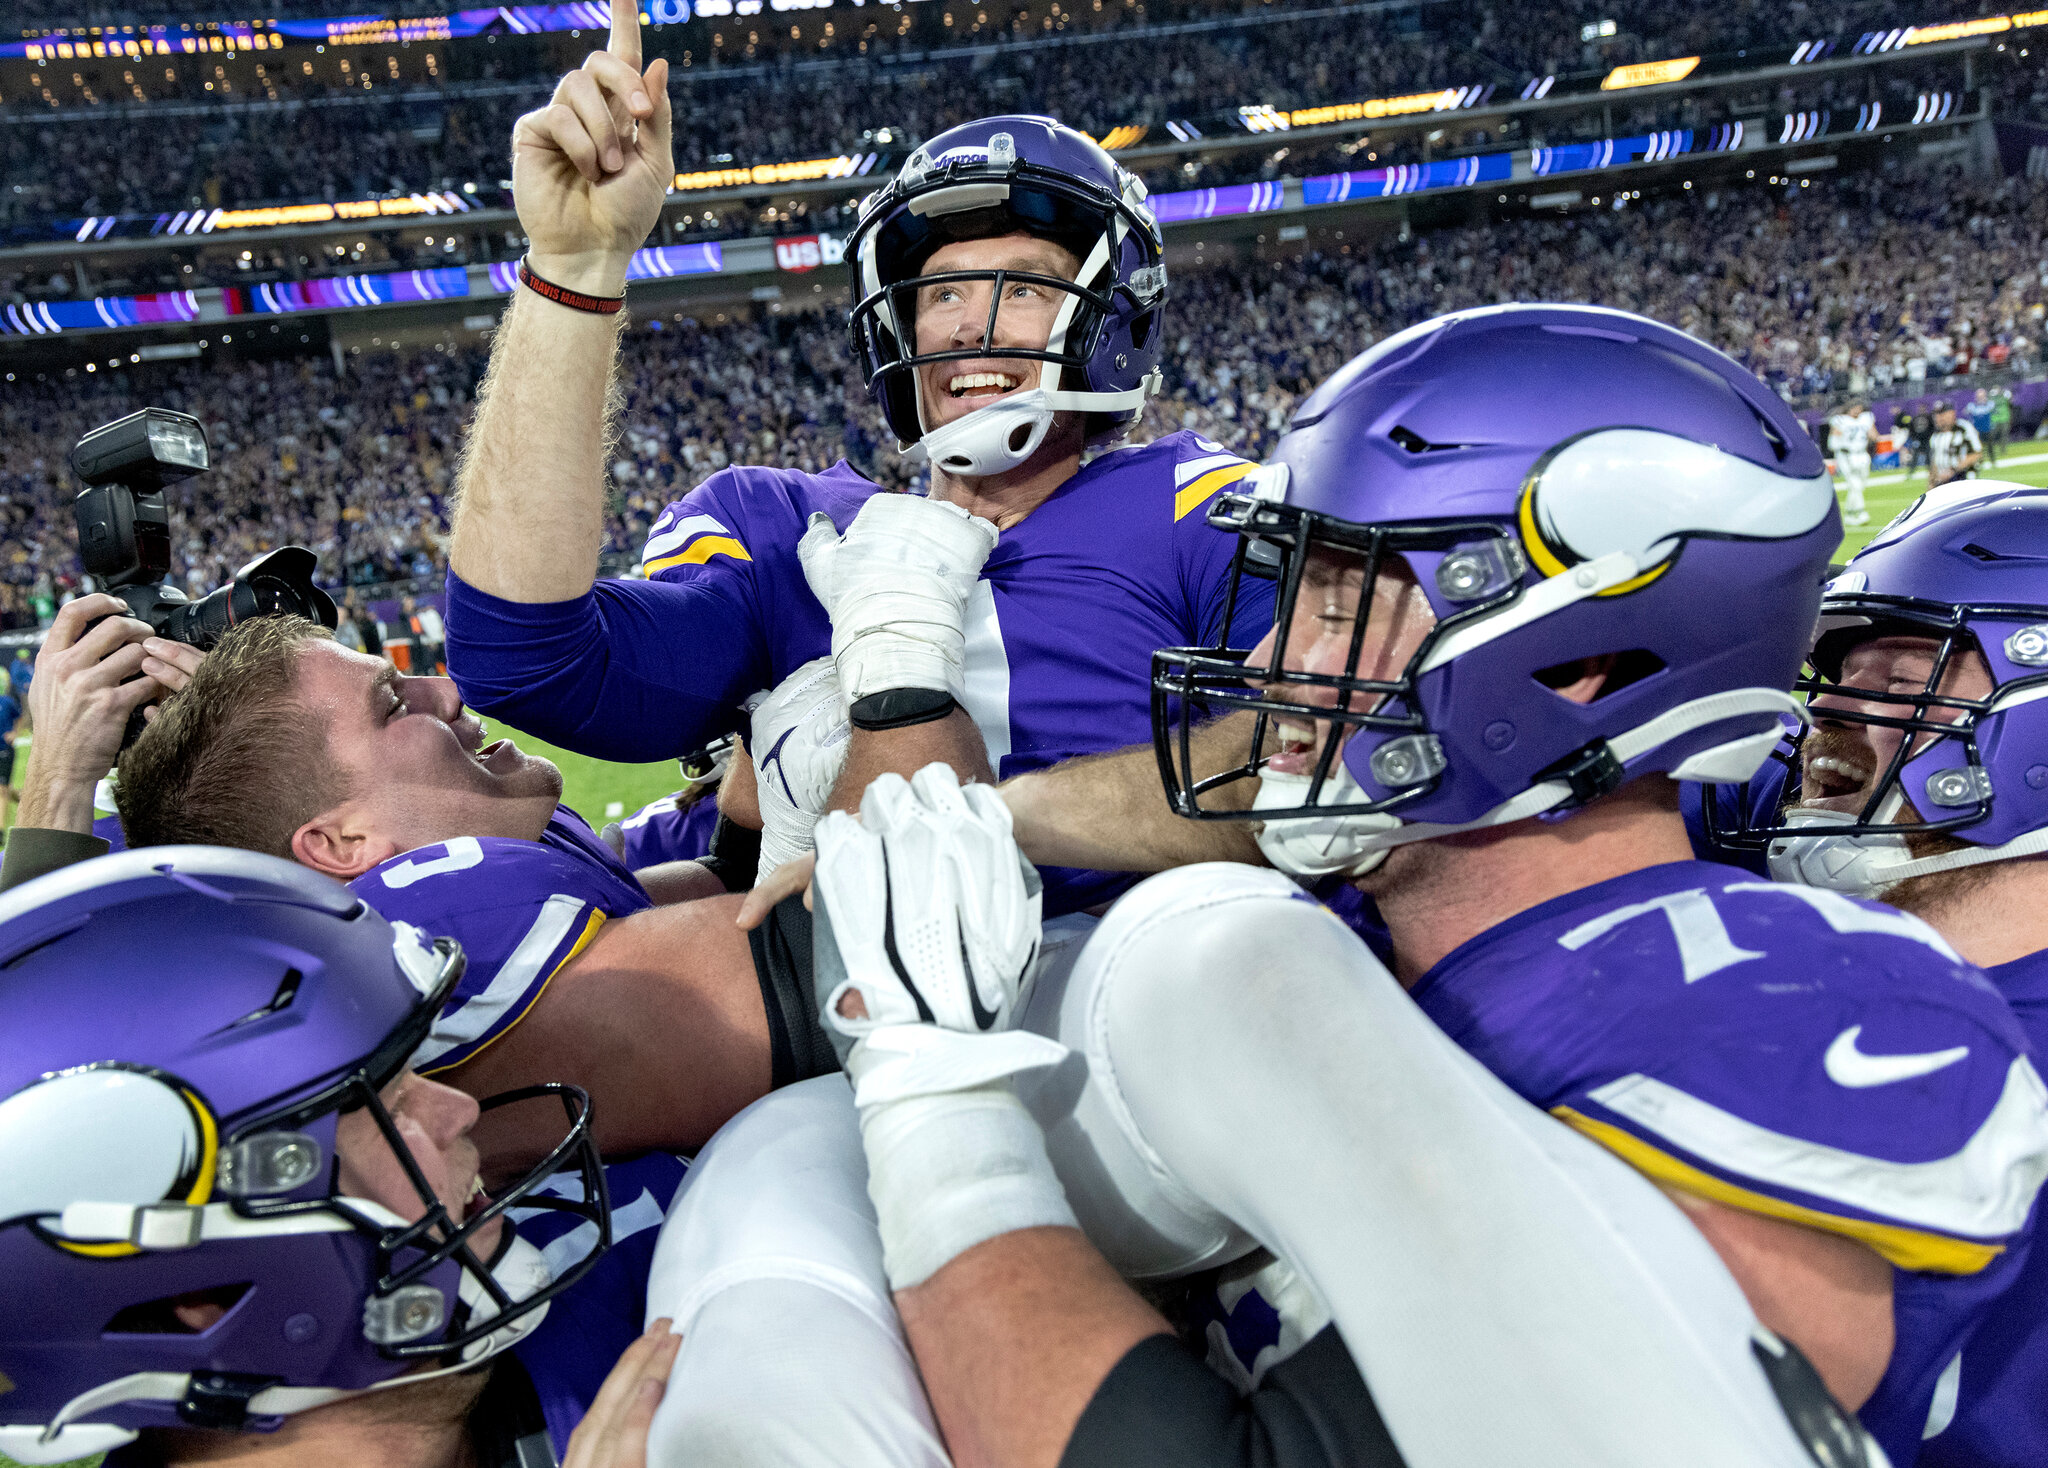 NFL News: Minnesota Vikings Make High-Stakes Move, Eyeing Top Draft Pick in NFL Gamble